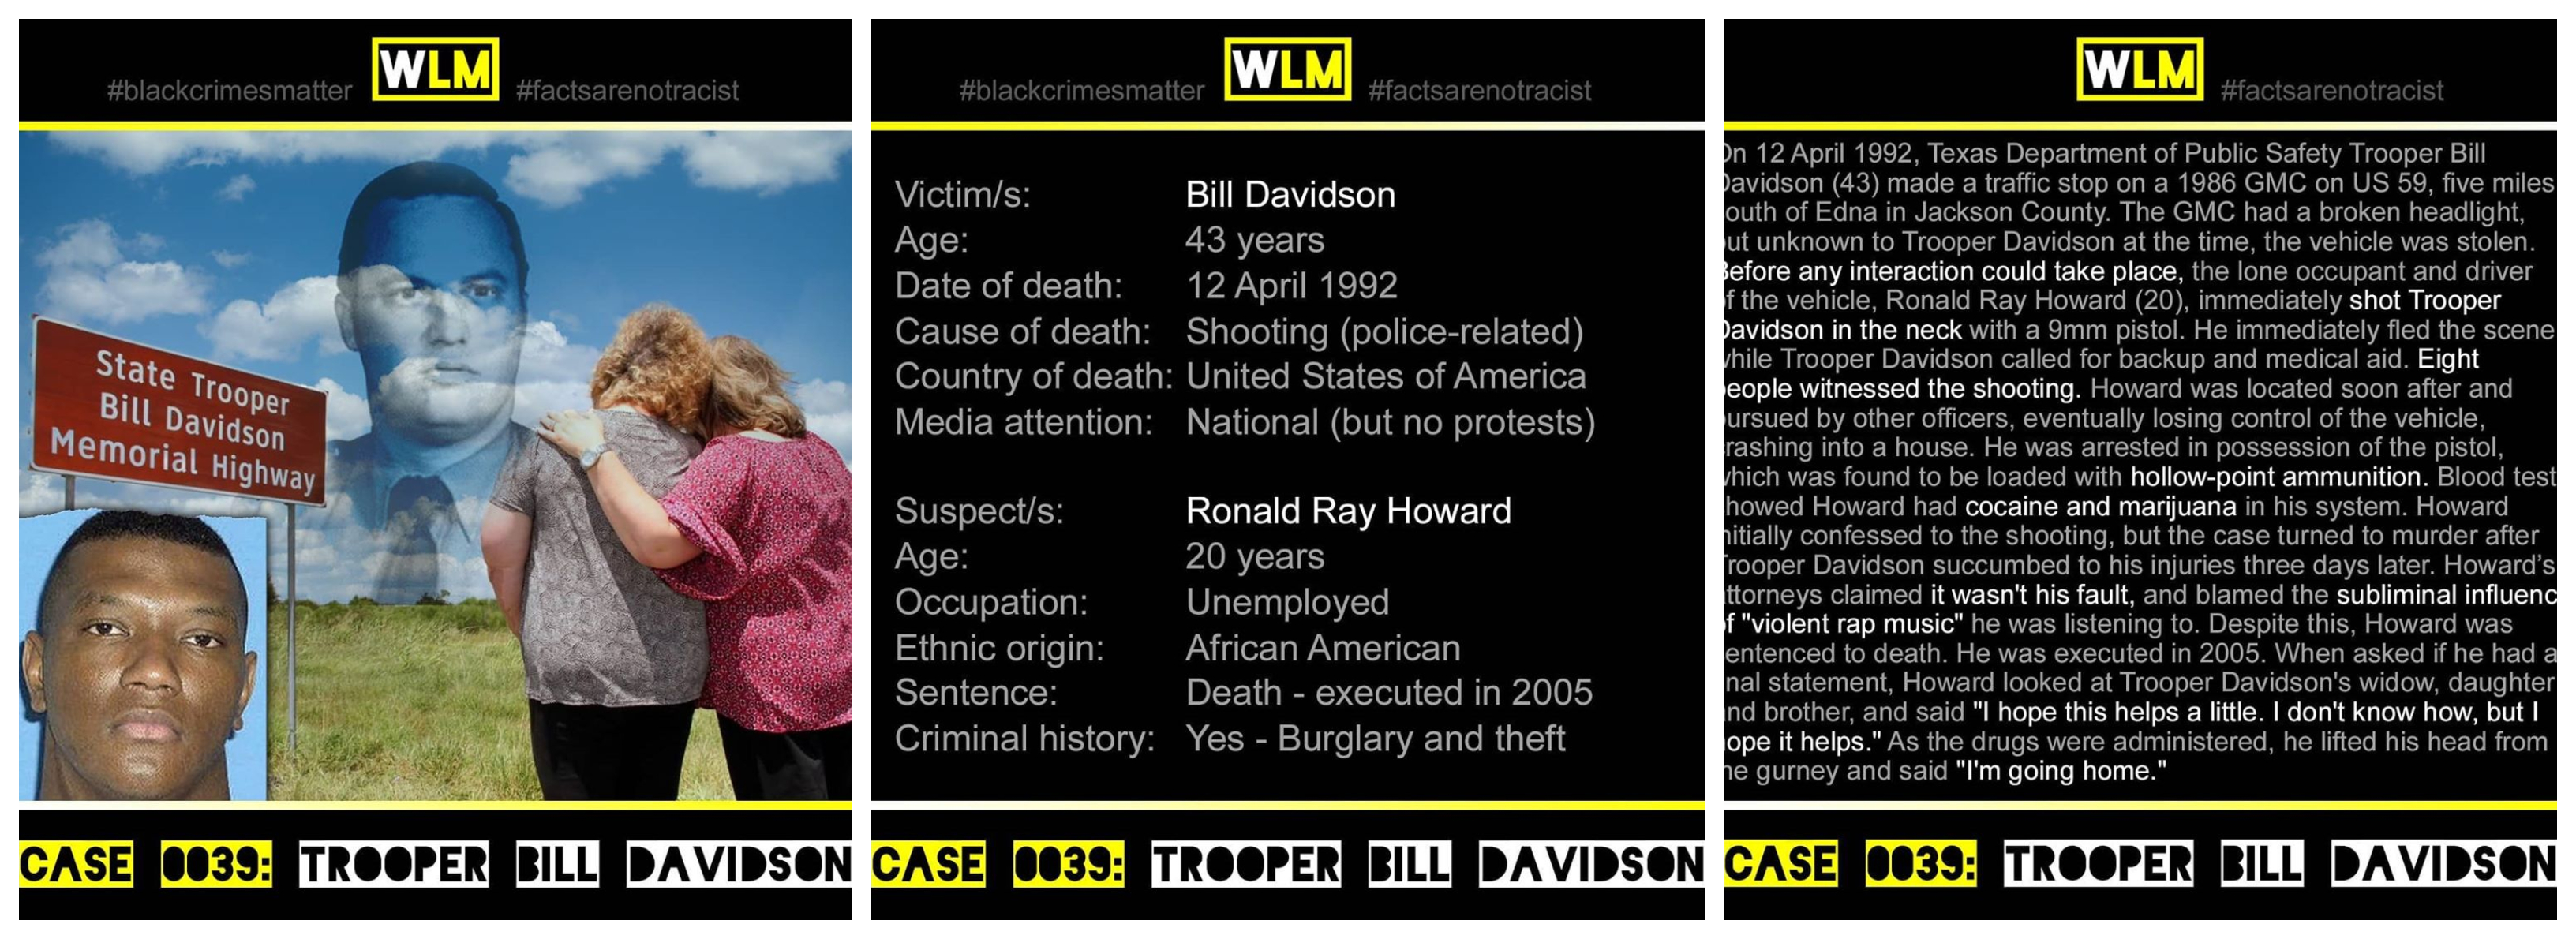 case-039-trooper-bill-davidson